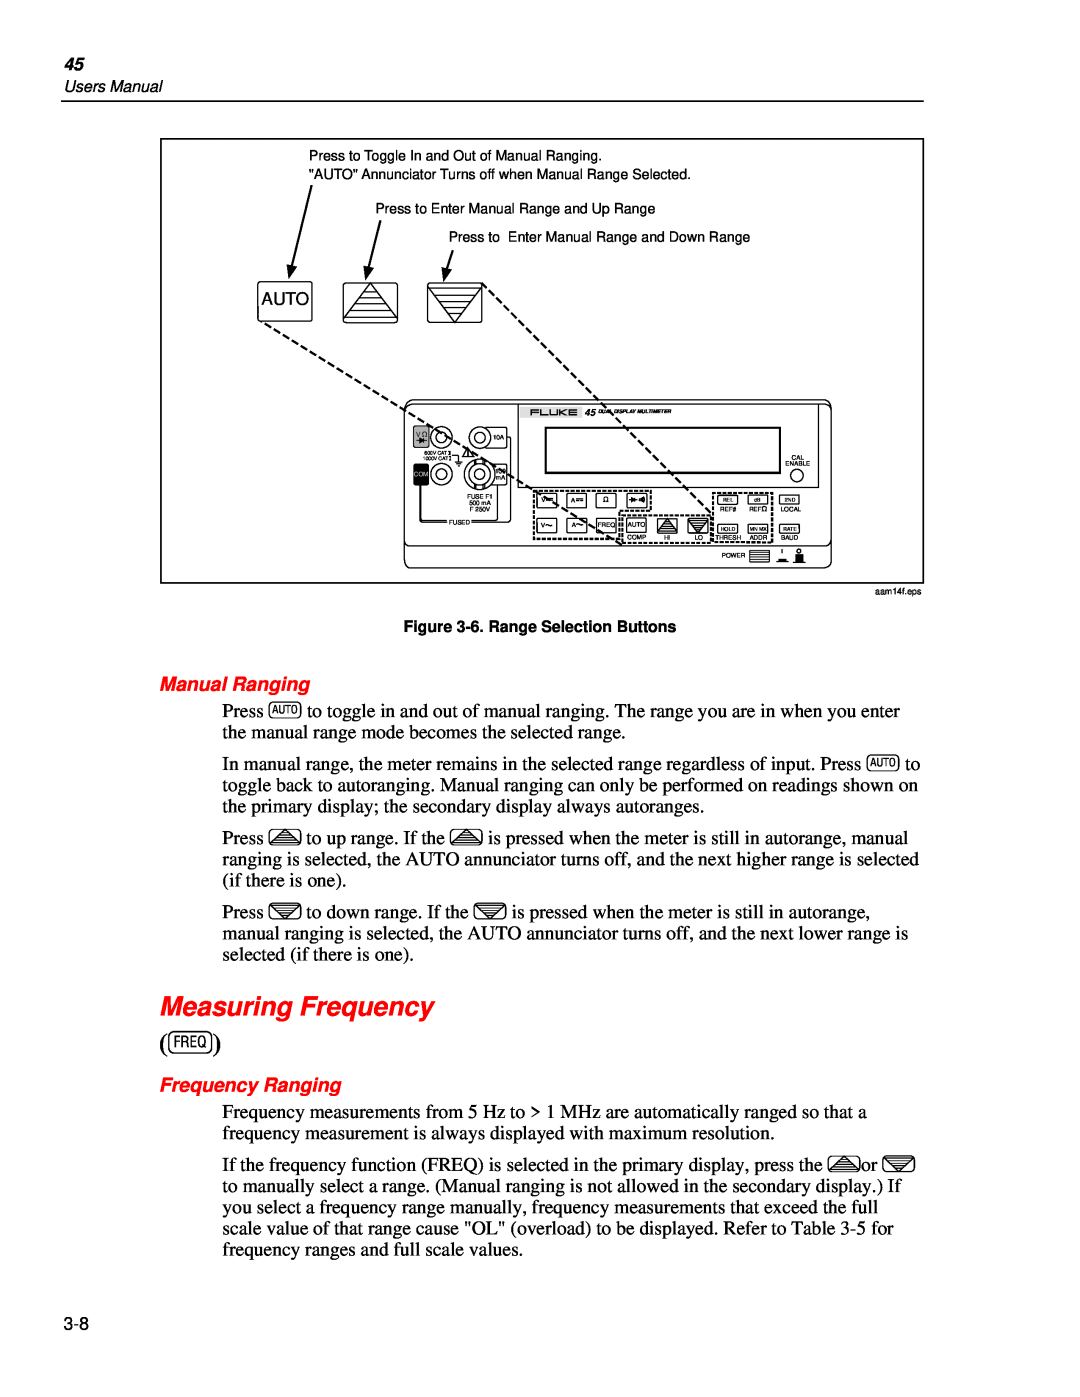 Fluke 45 user manual Measuring Frequency, Manual Ranging, Frequency Ranging 